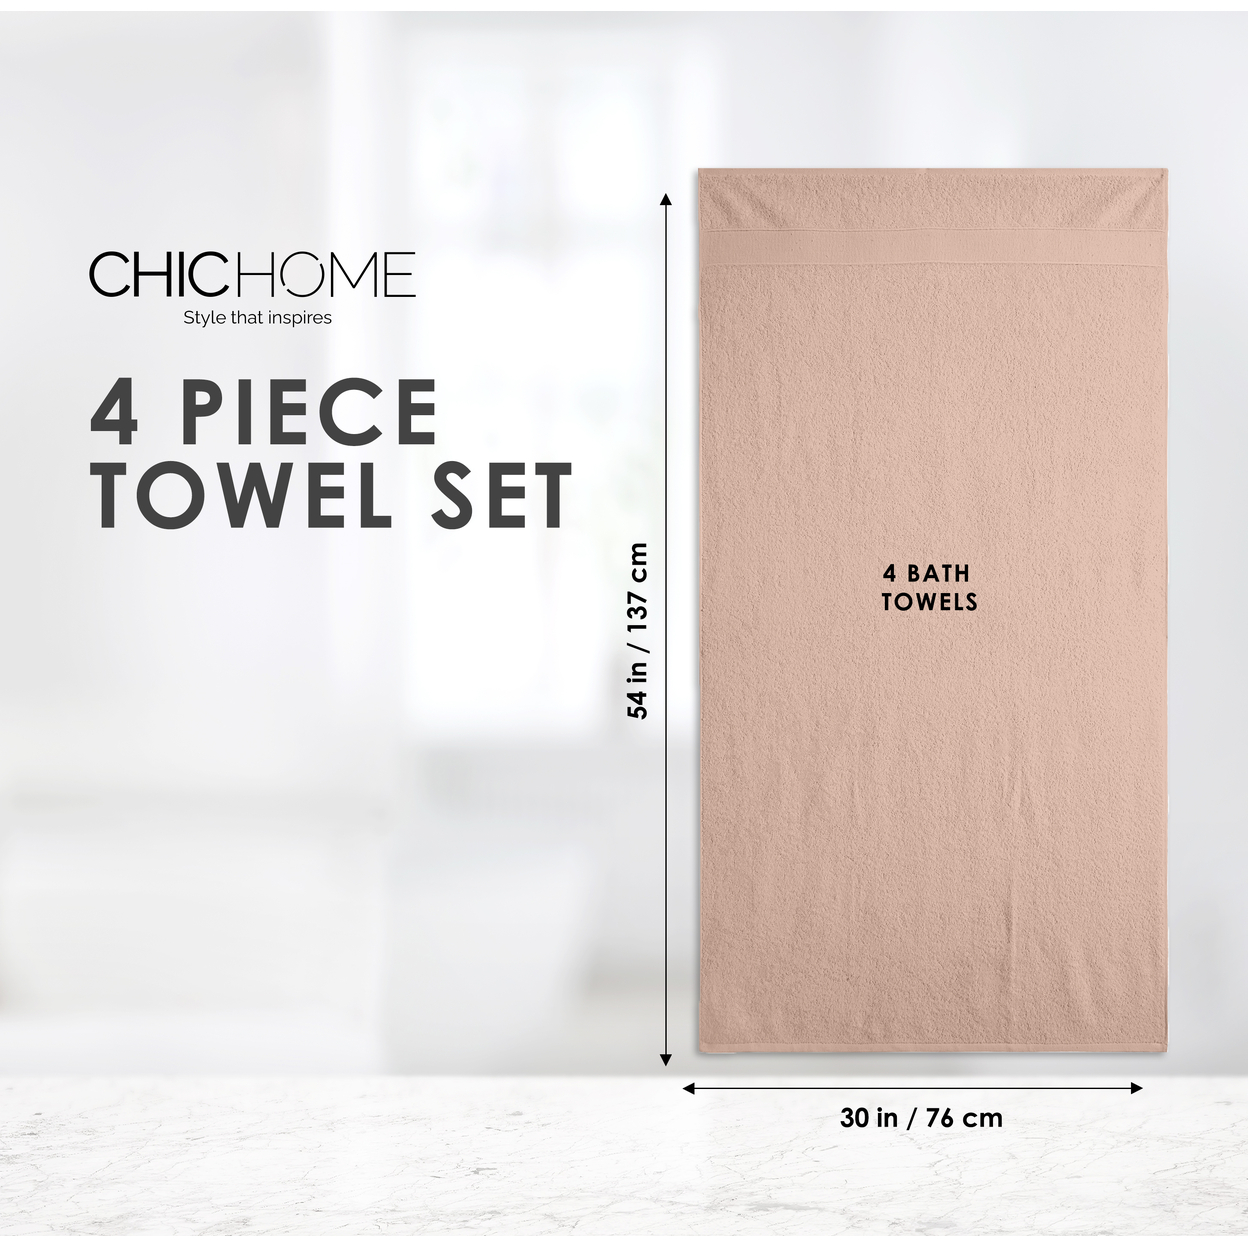 Chic Home Luxurious 4-Piece 100% Pure Turkish Cotton Bath Towels, 30 X 54, Dobby Border Design, OEKO-TEX Certified Set - Taupe